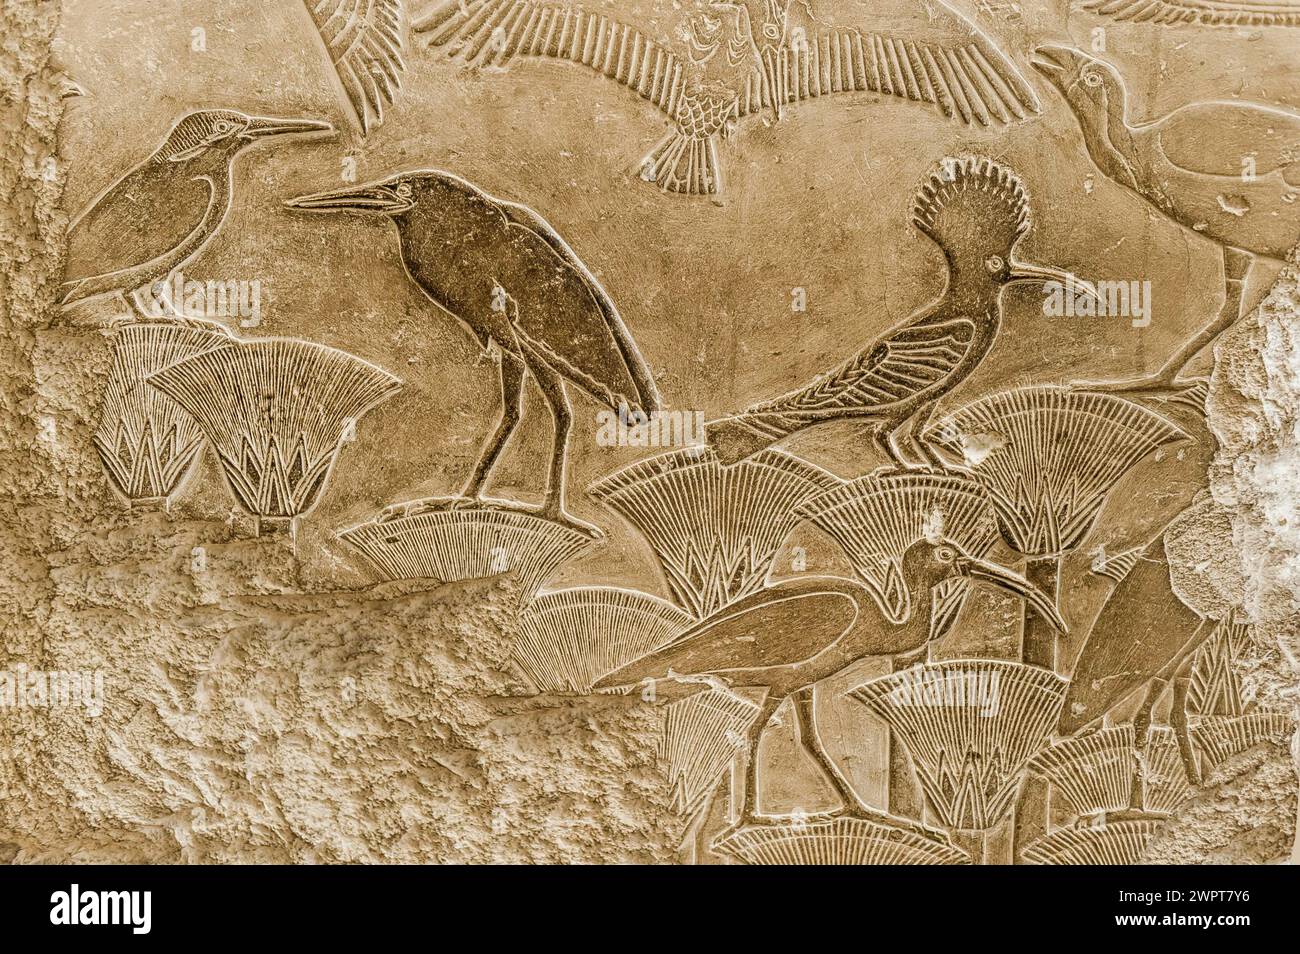 Hieroglyphics on a stone slab, birds, animal, ibis, message, drawing, Egyptian, kingdom, antiquity, world history, history, tradition, culture Stock Photo